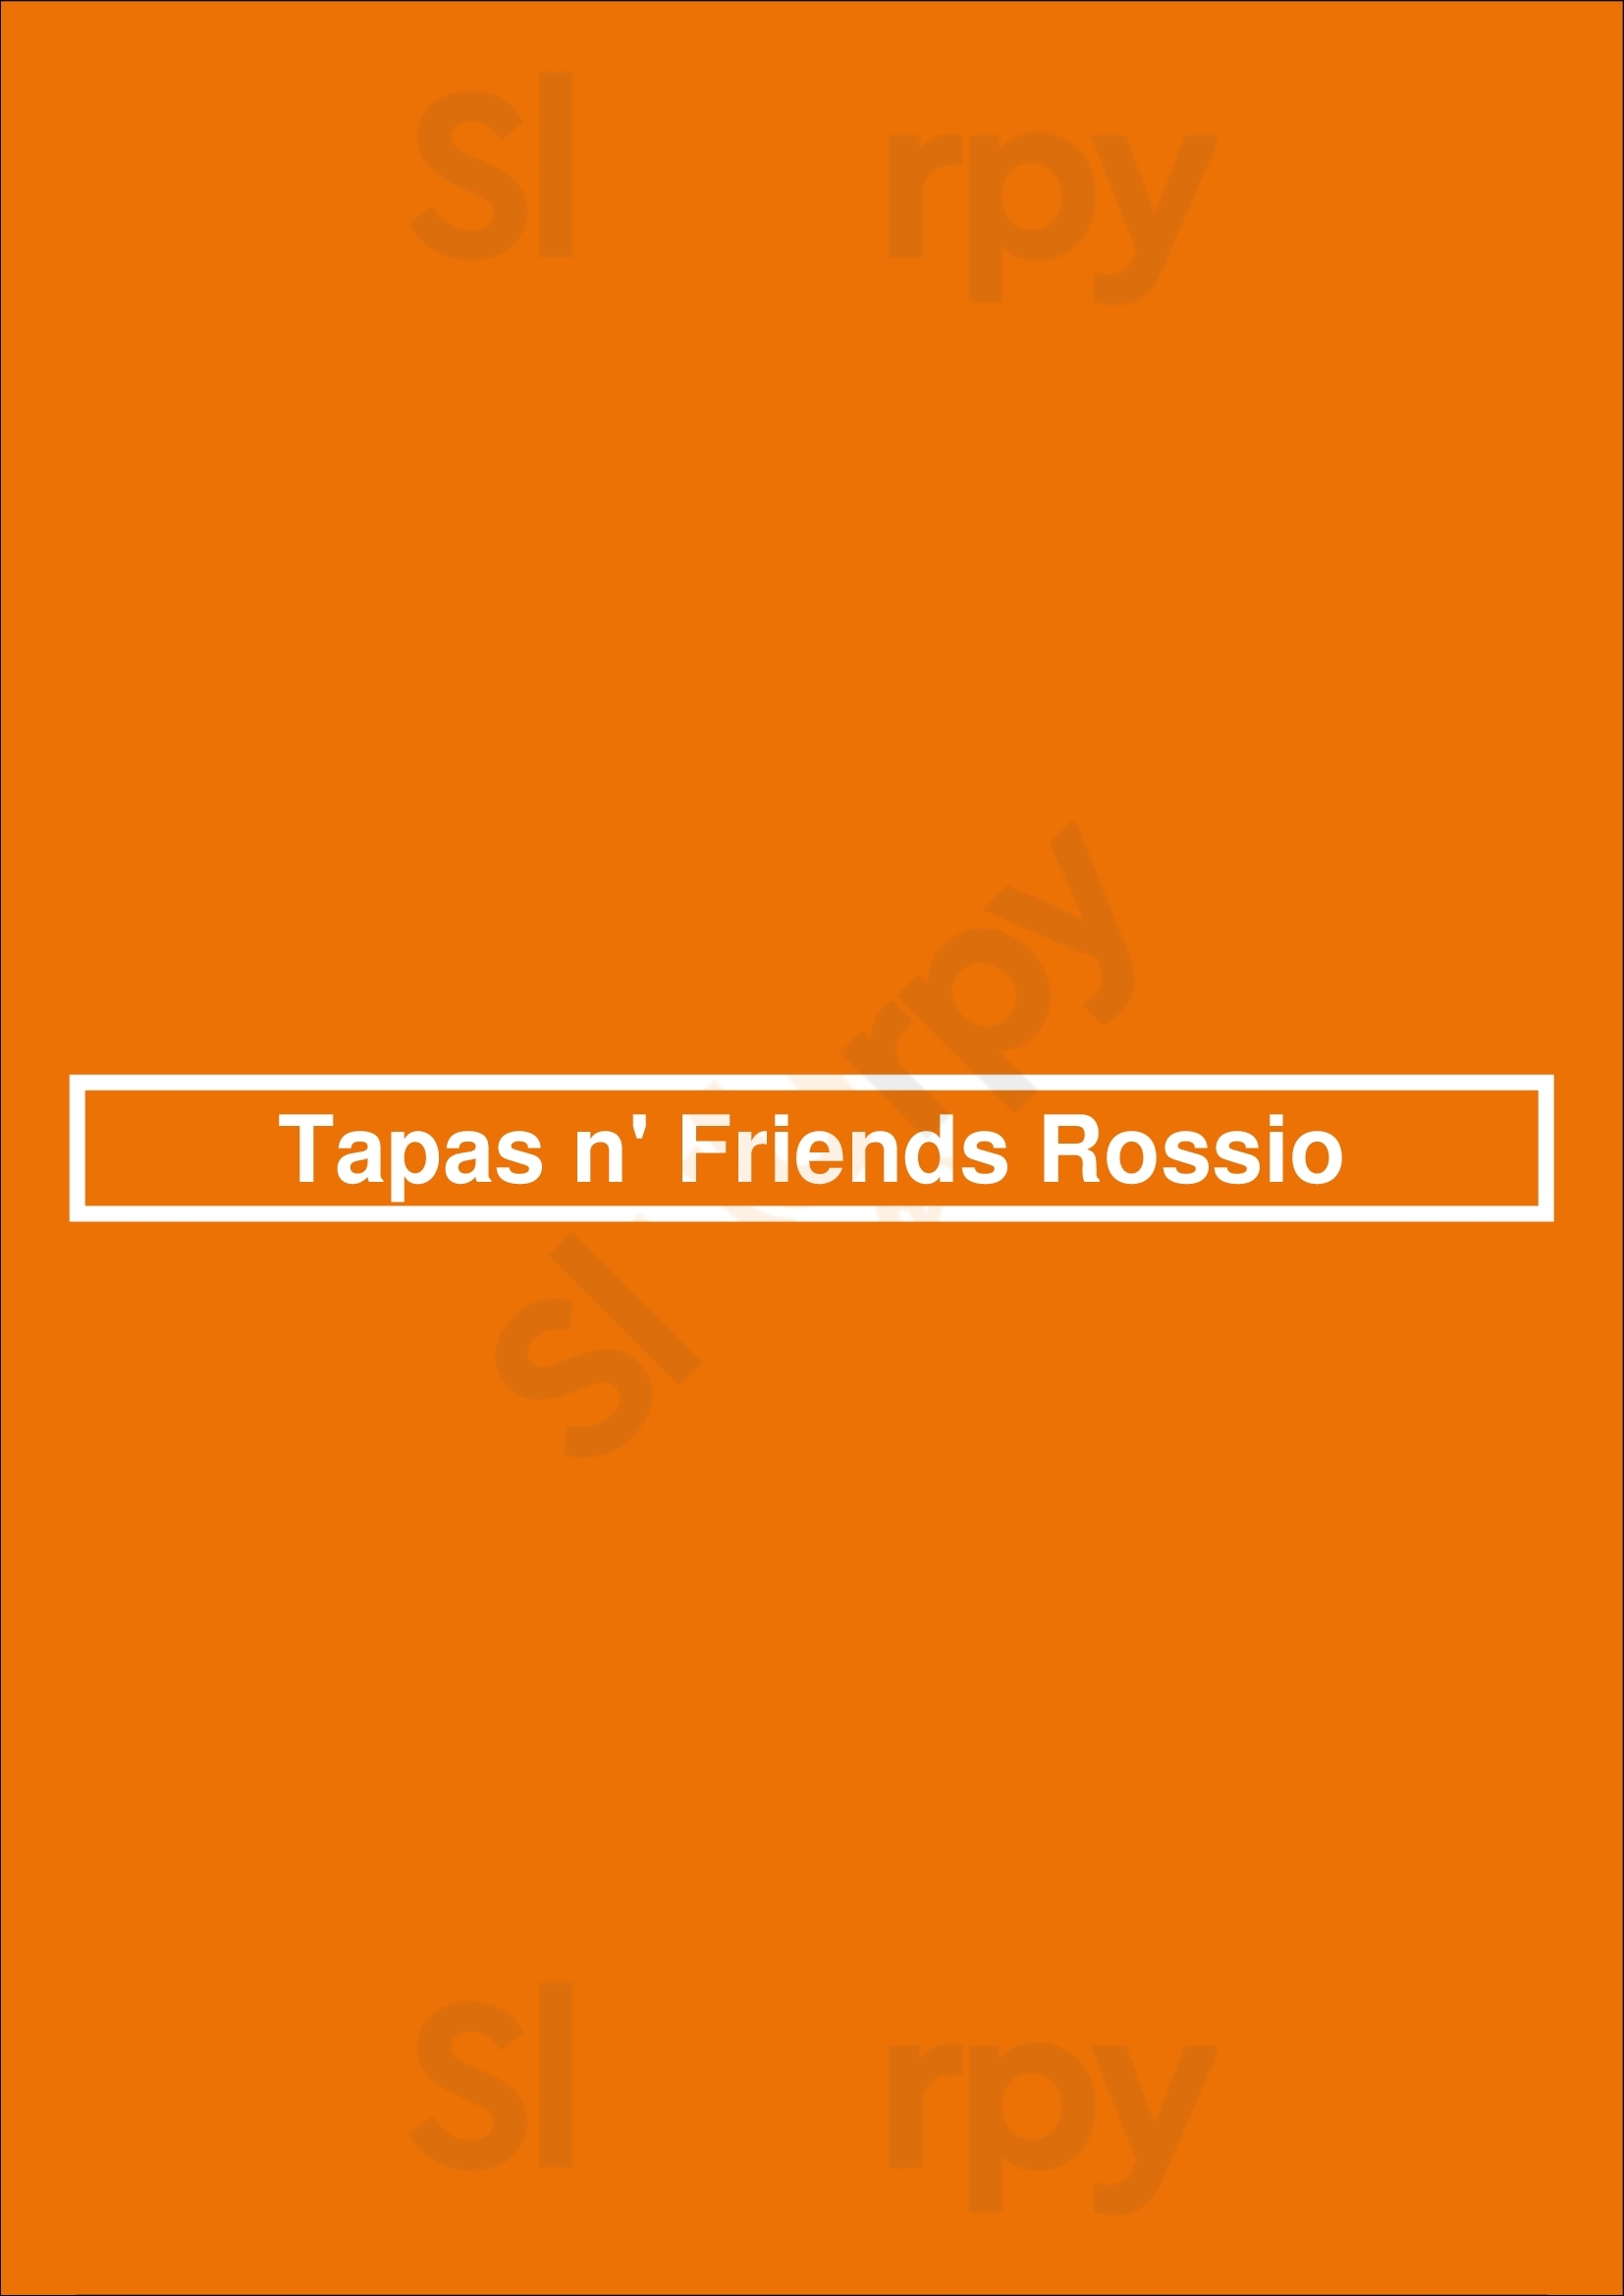 Tapas N' Friends Rossio Lisboa Menu - 1